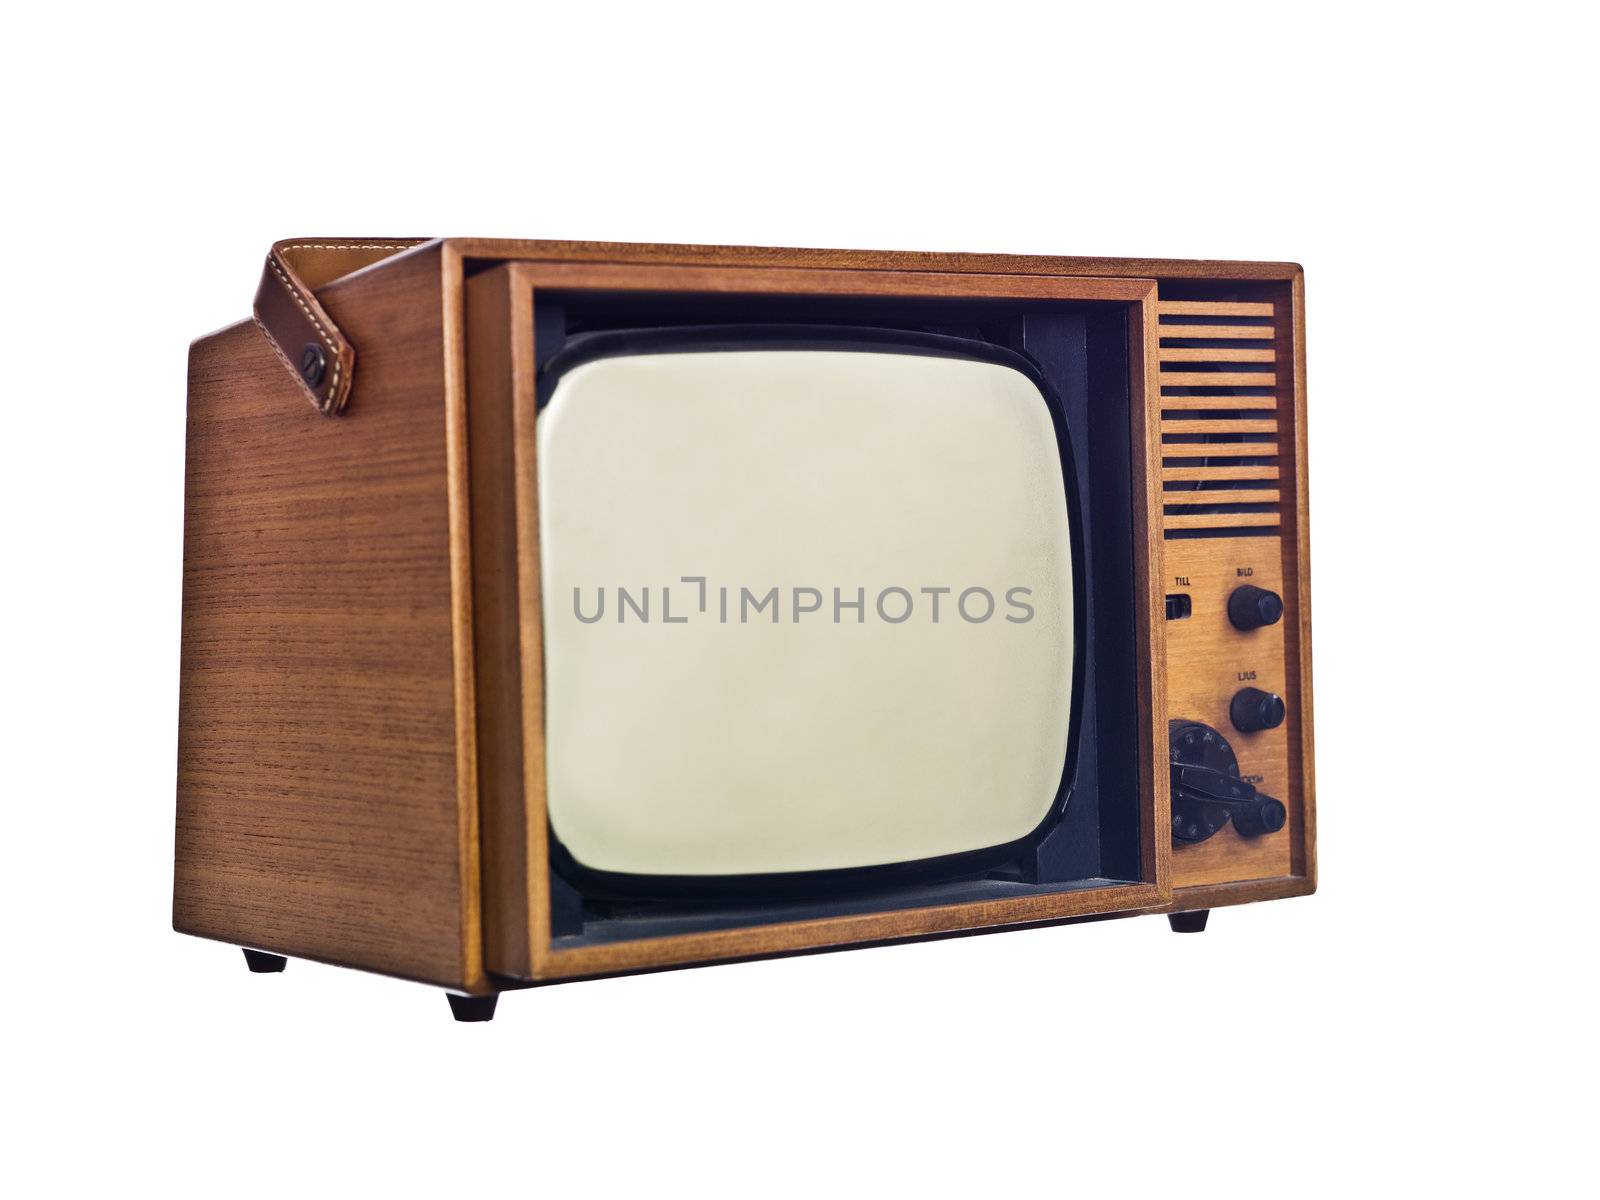 Vintage television by gemenacom